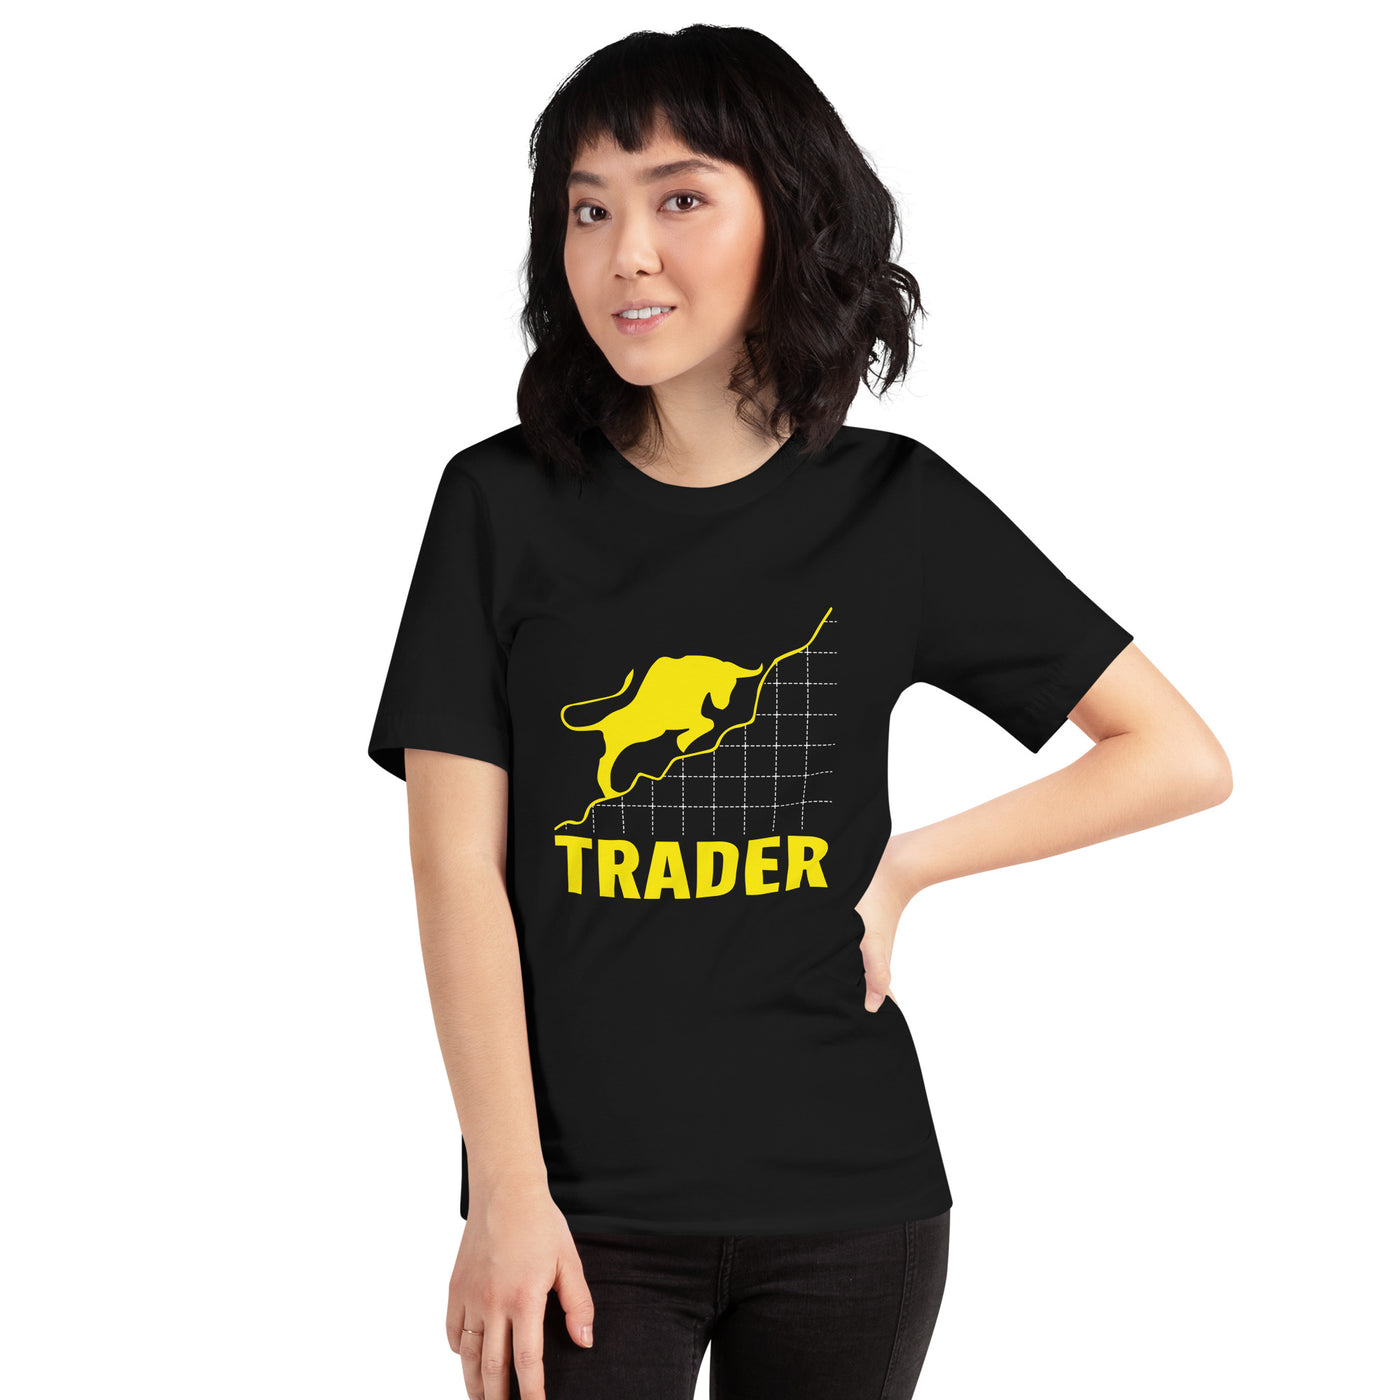 Trader - Unisex t-shirt